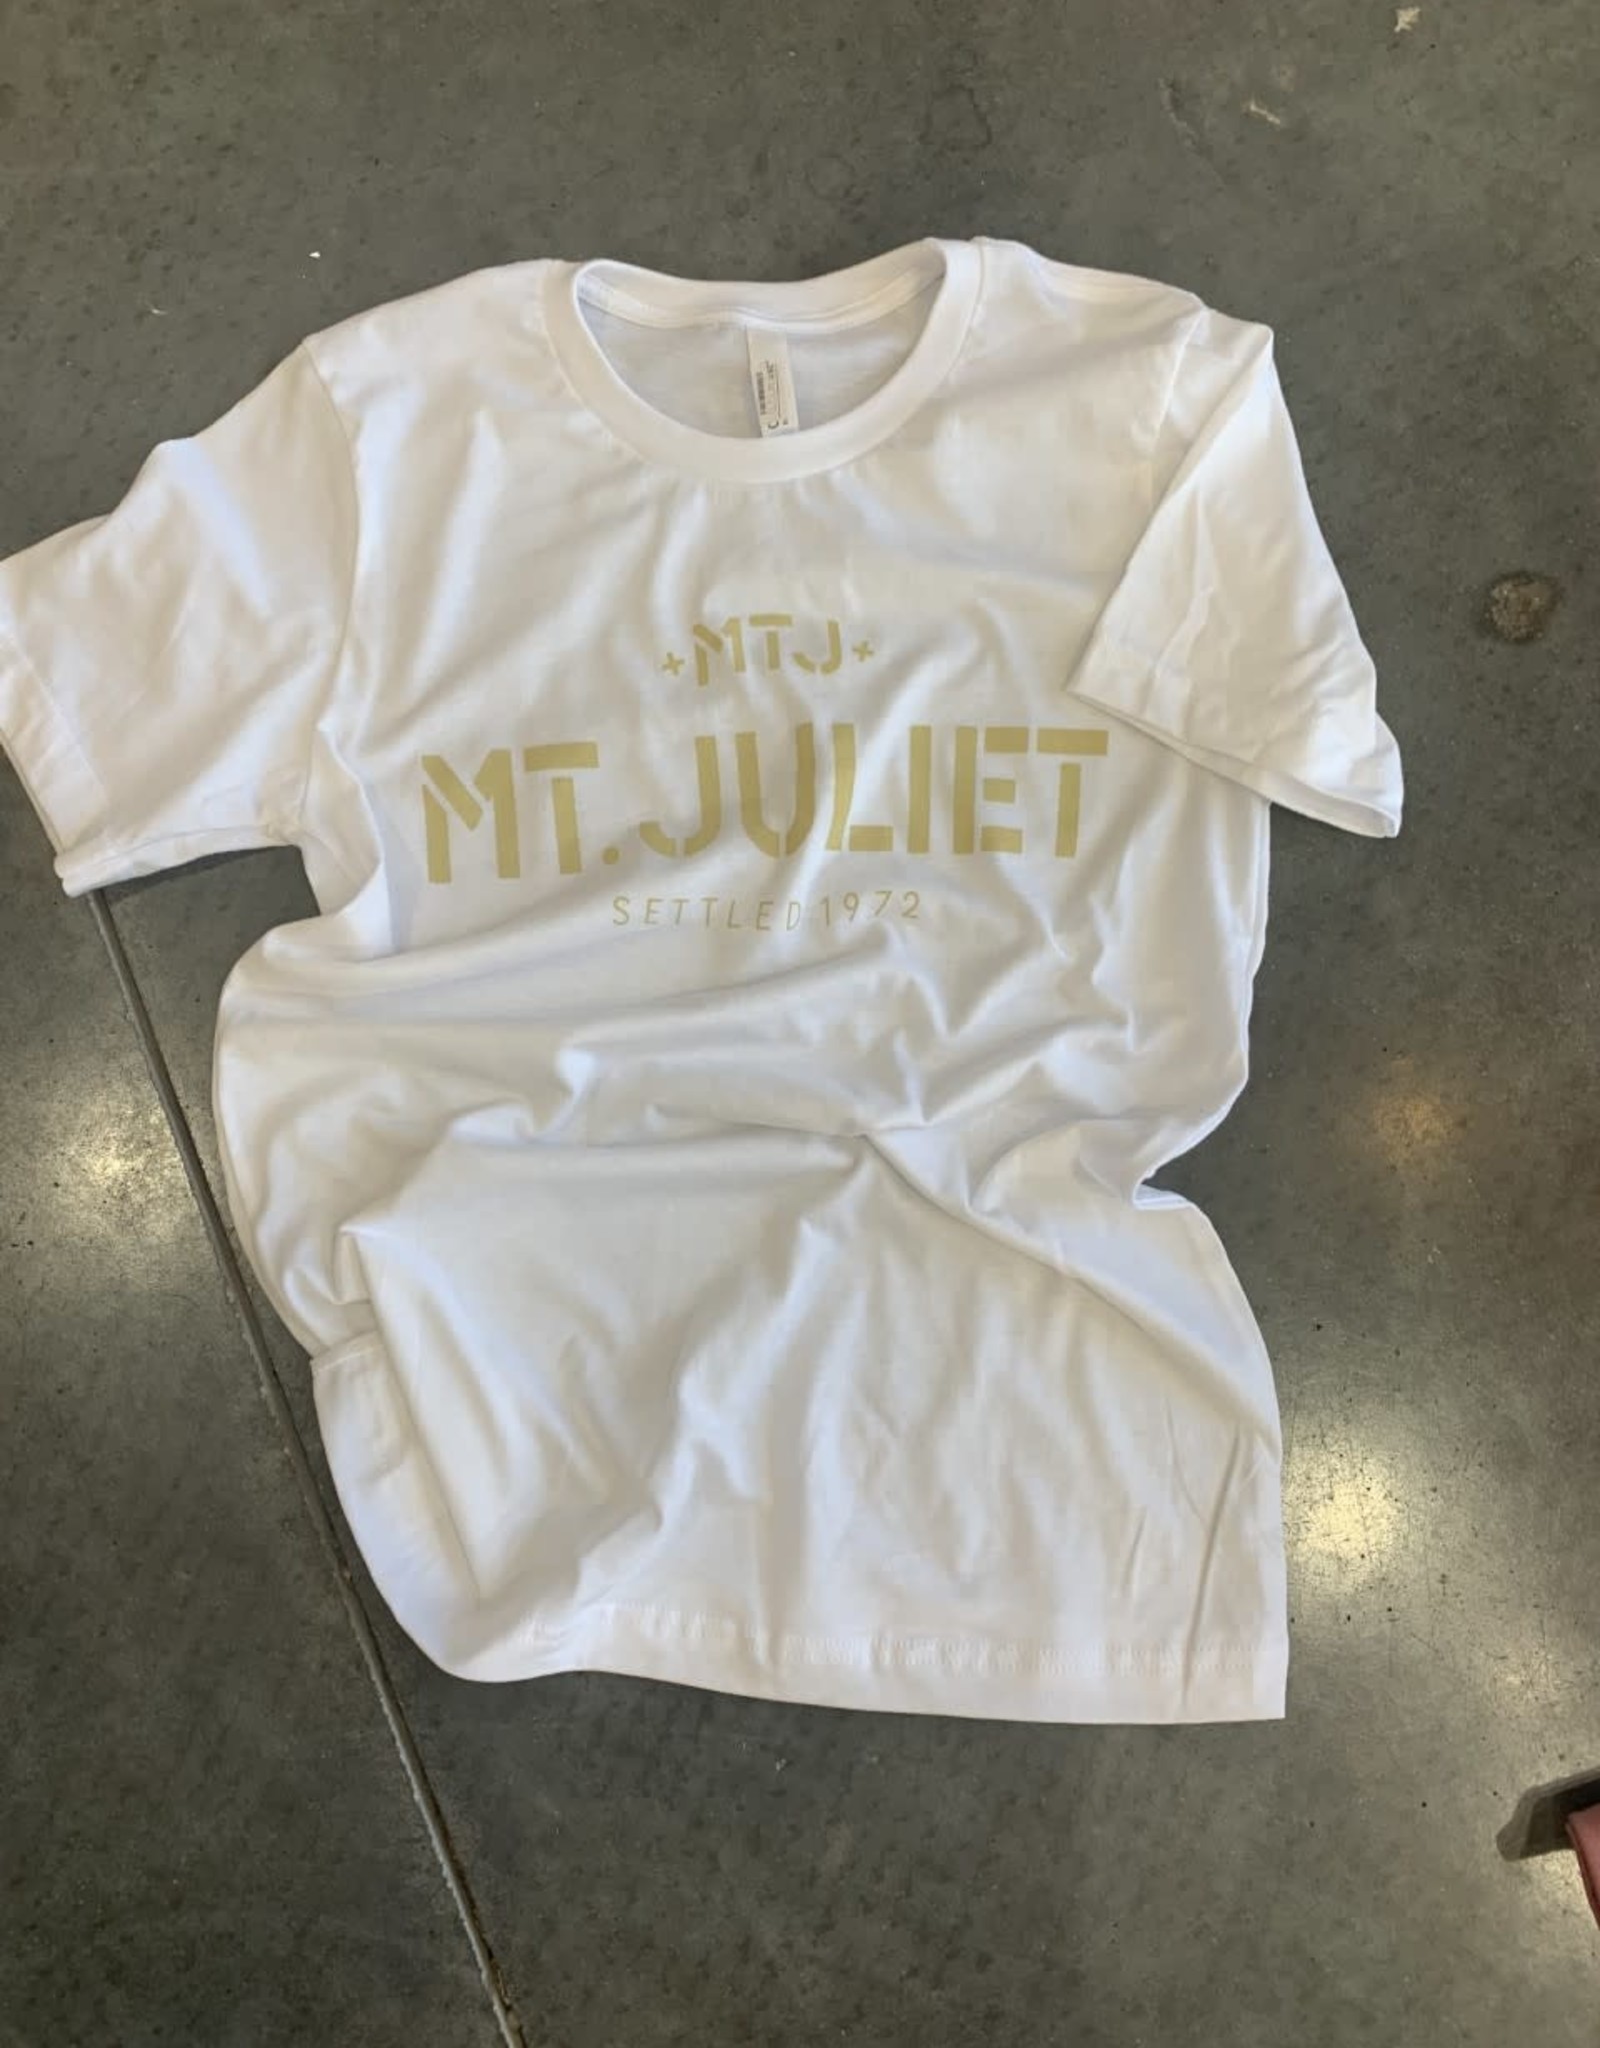 Ellen & Grace Mt Juliet 1972 Tshirt